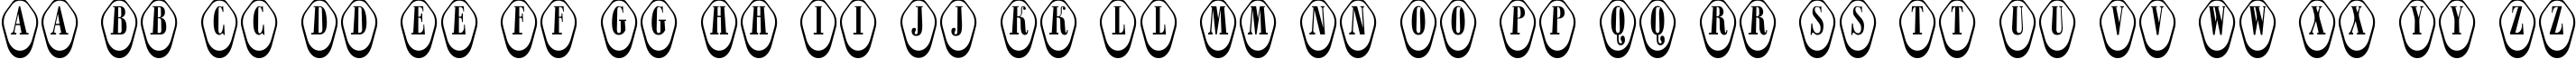 Пример написания английского алфавита шрифтом a_RombyRndOtlDn3D